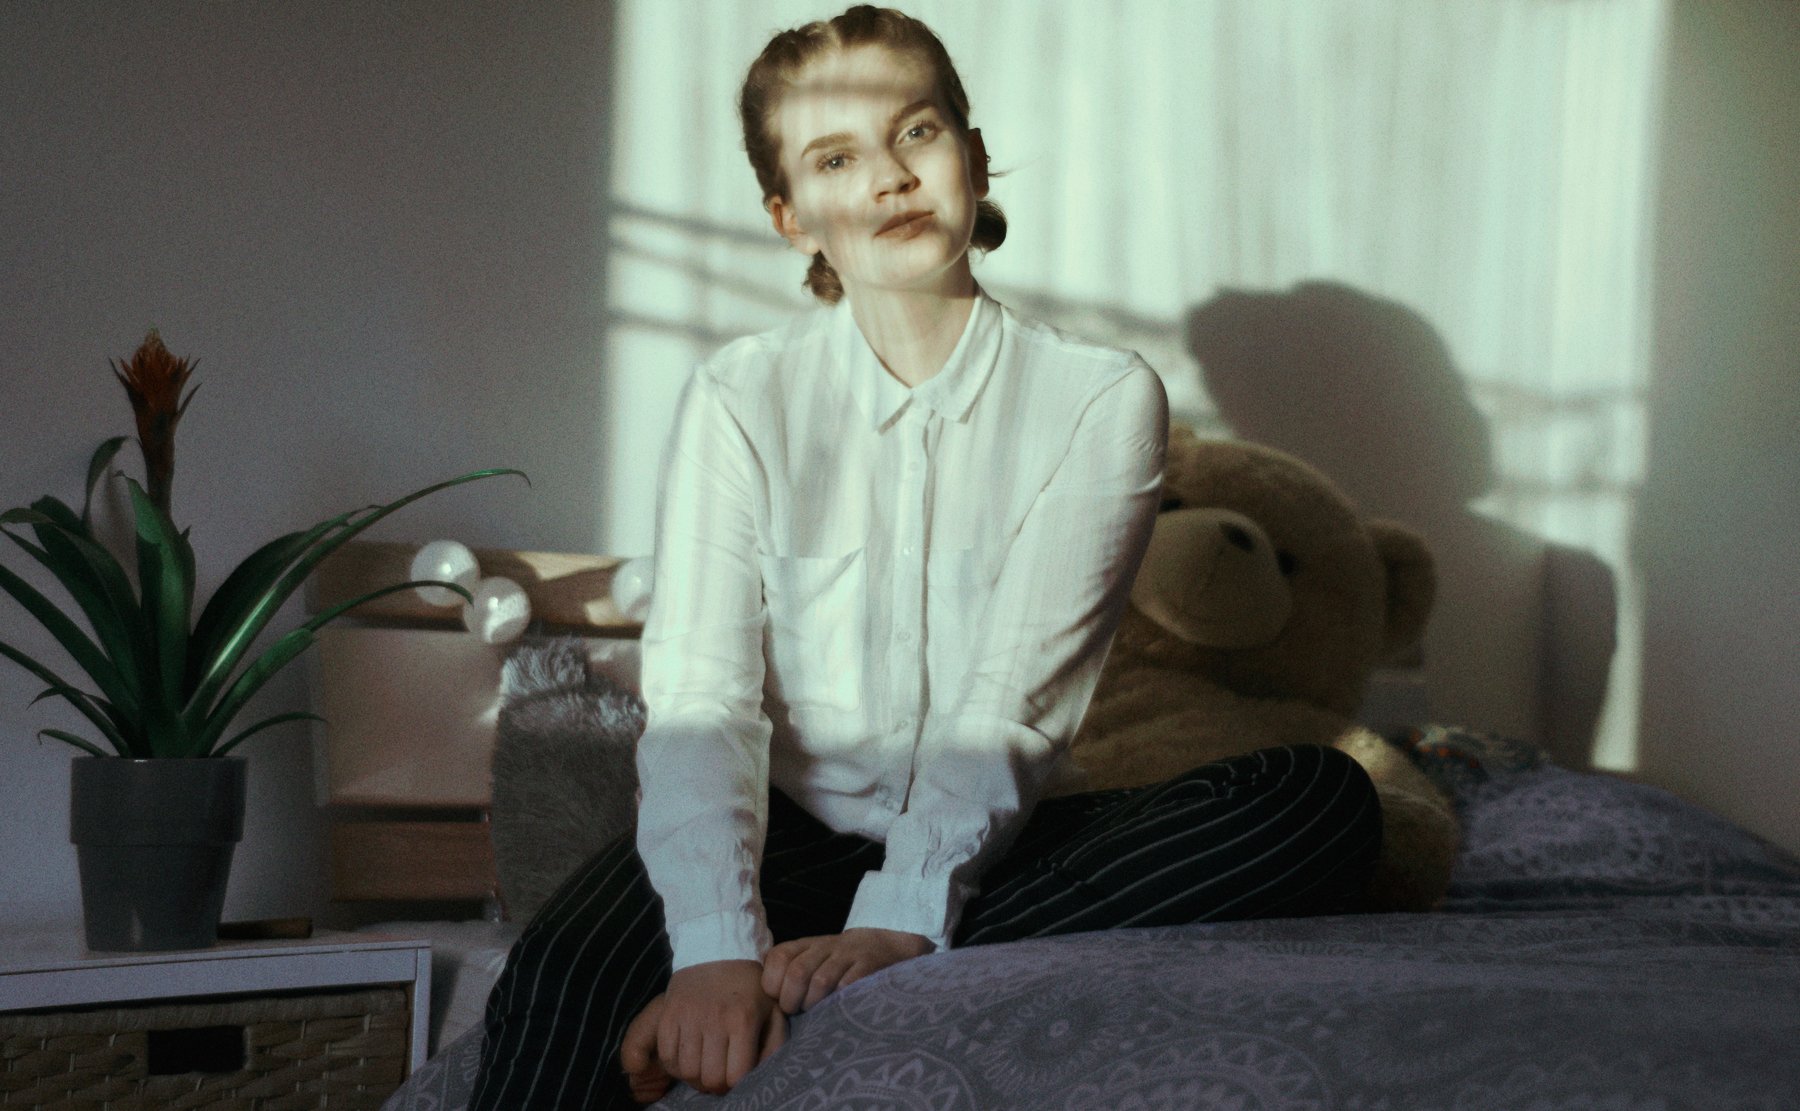 #girl #portrait #room #bedroom #teddybear, fineus